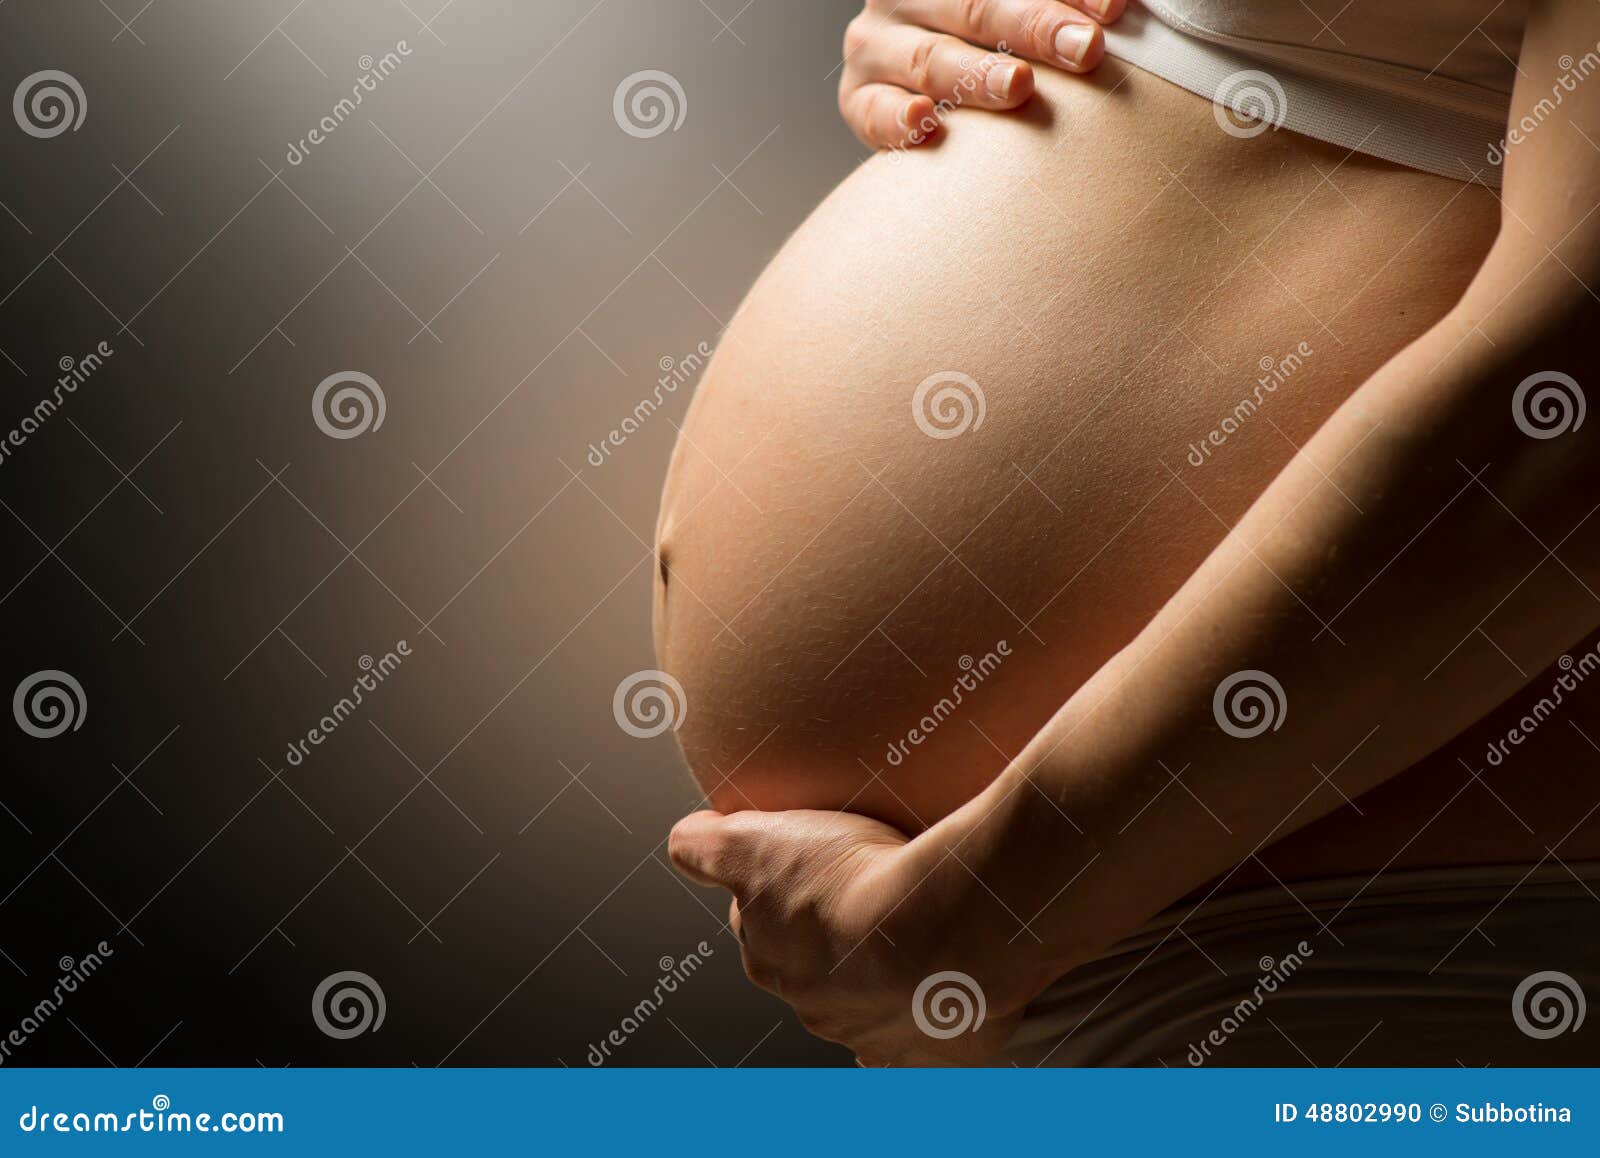 231,335 Pregnant Belly Stock Photos pic